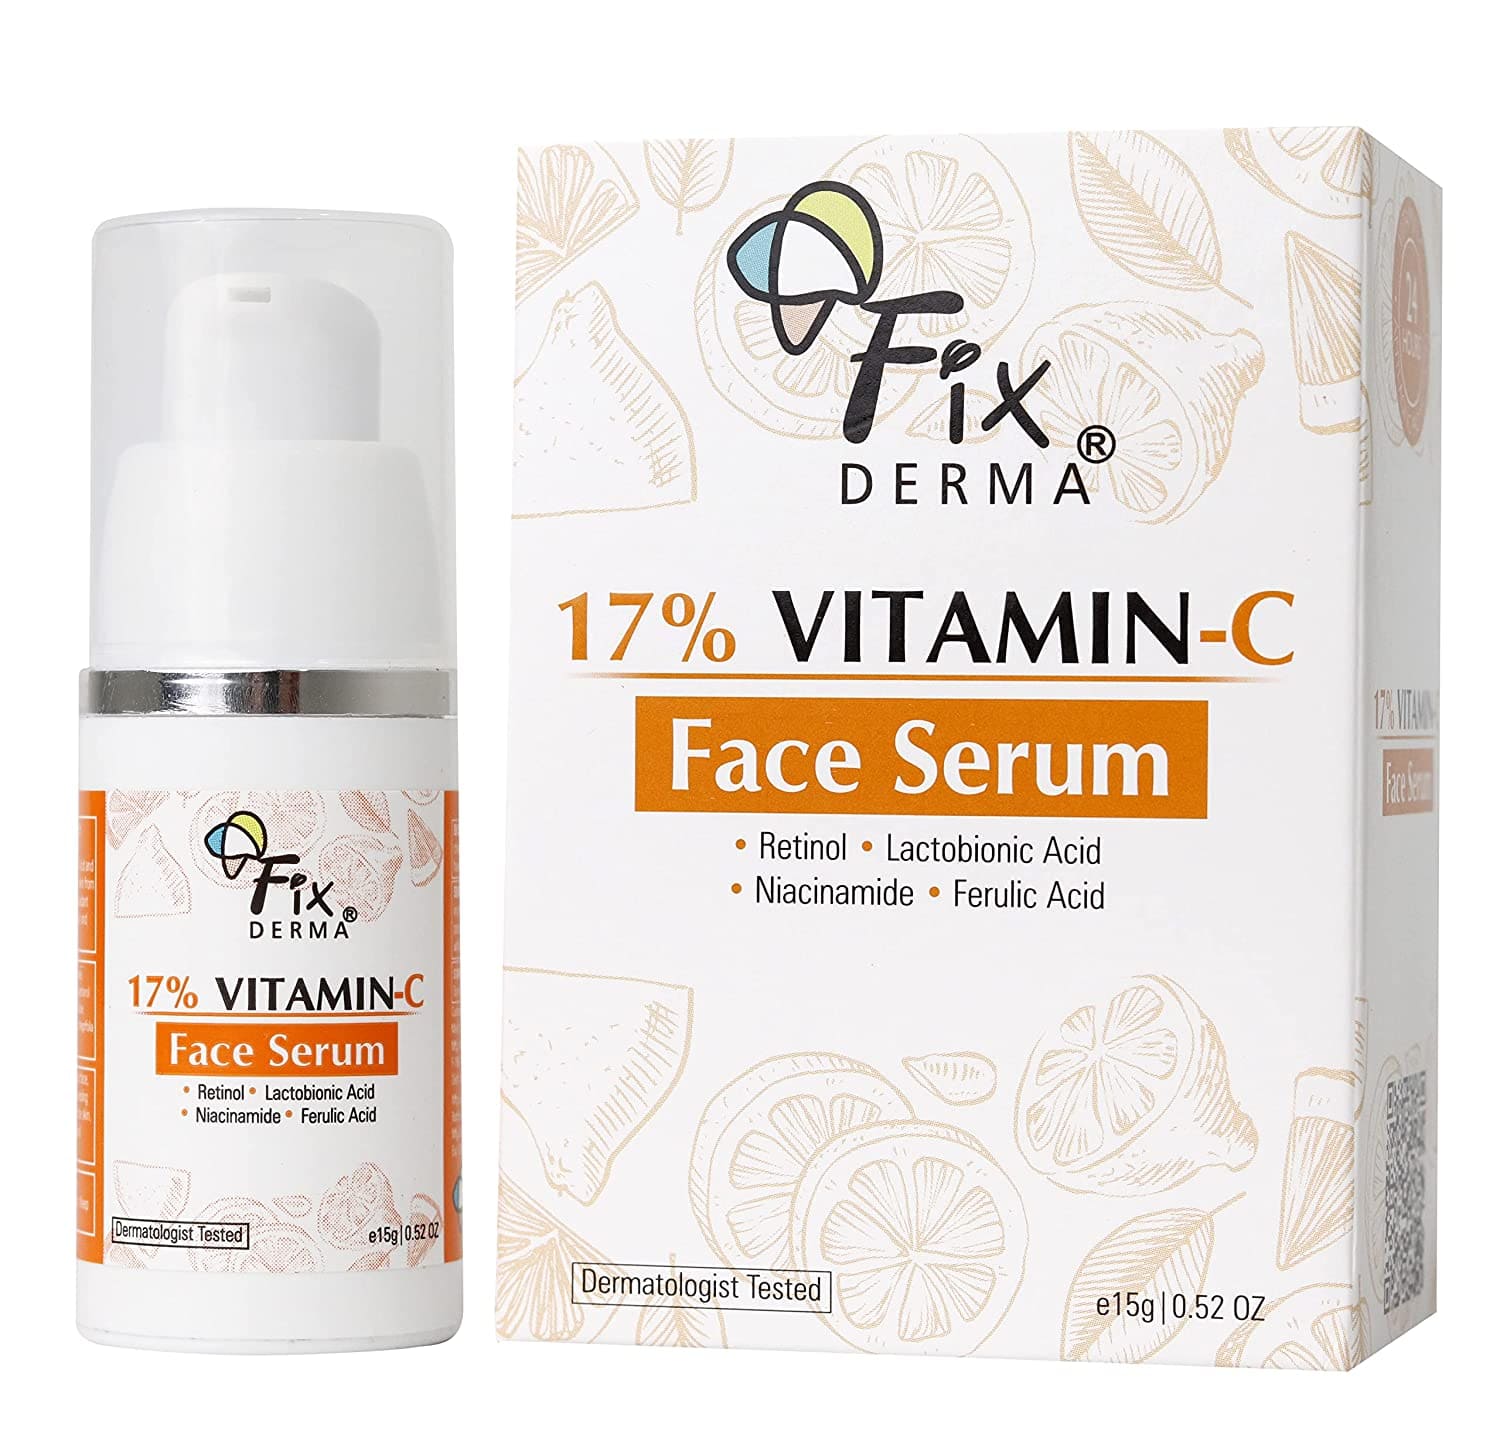 Fixderma 17% Vitamin C Face Serum for Glowing Skin